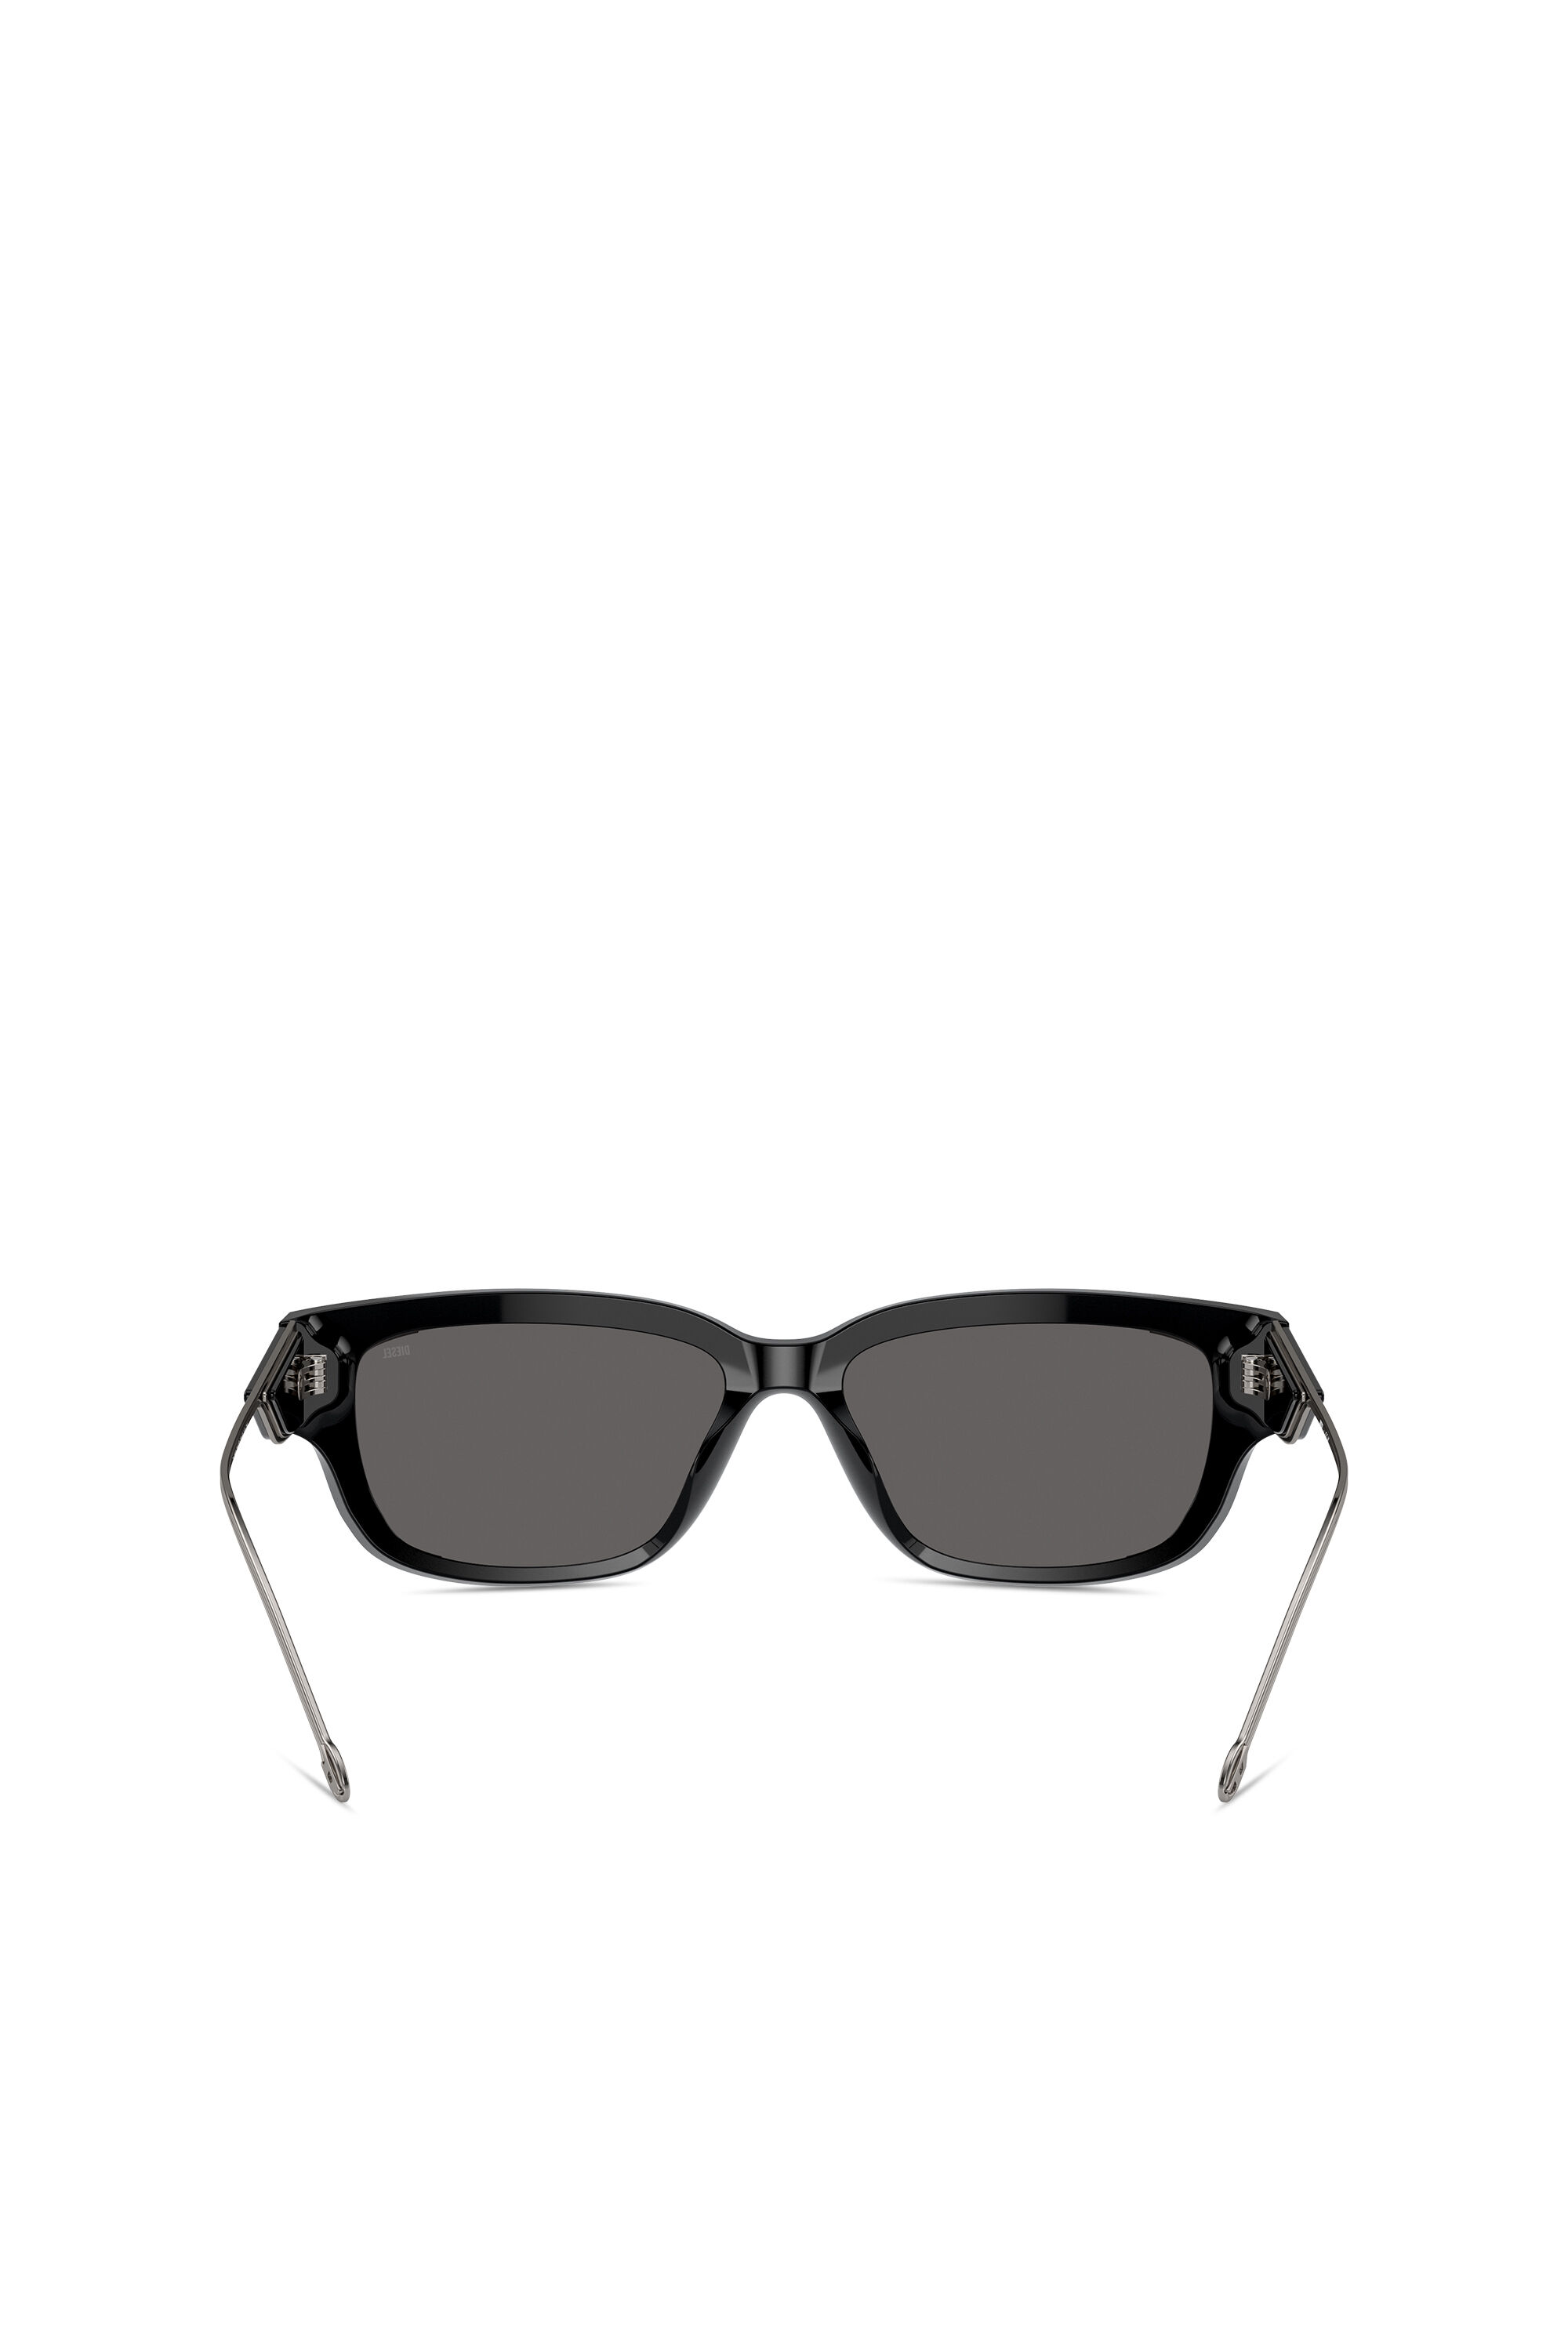 Women's Everyday style sunglasses | Black | Diesel